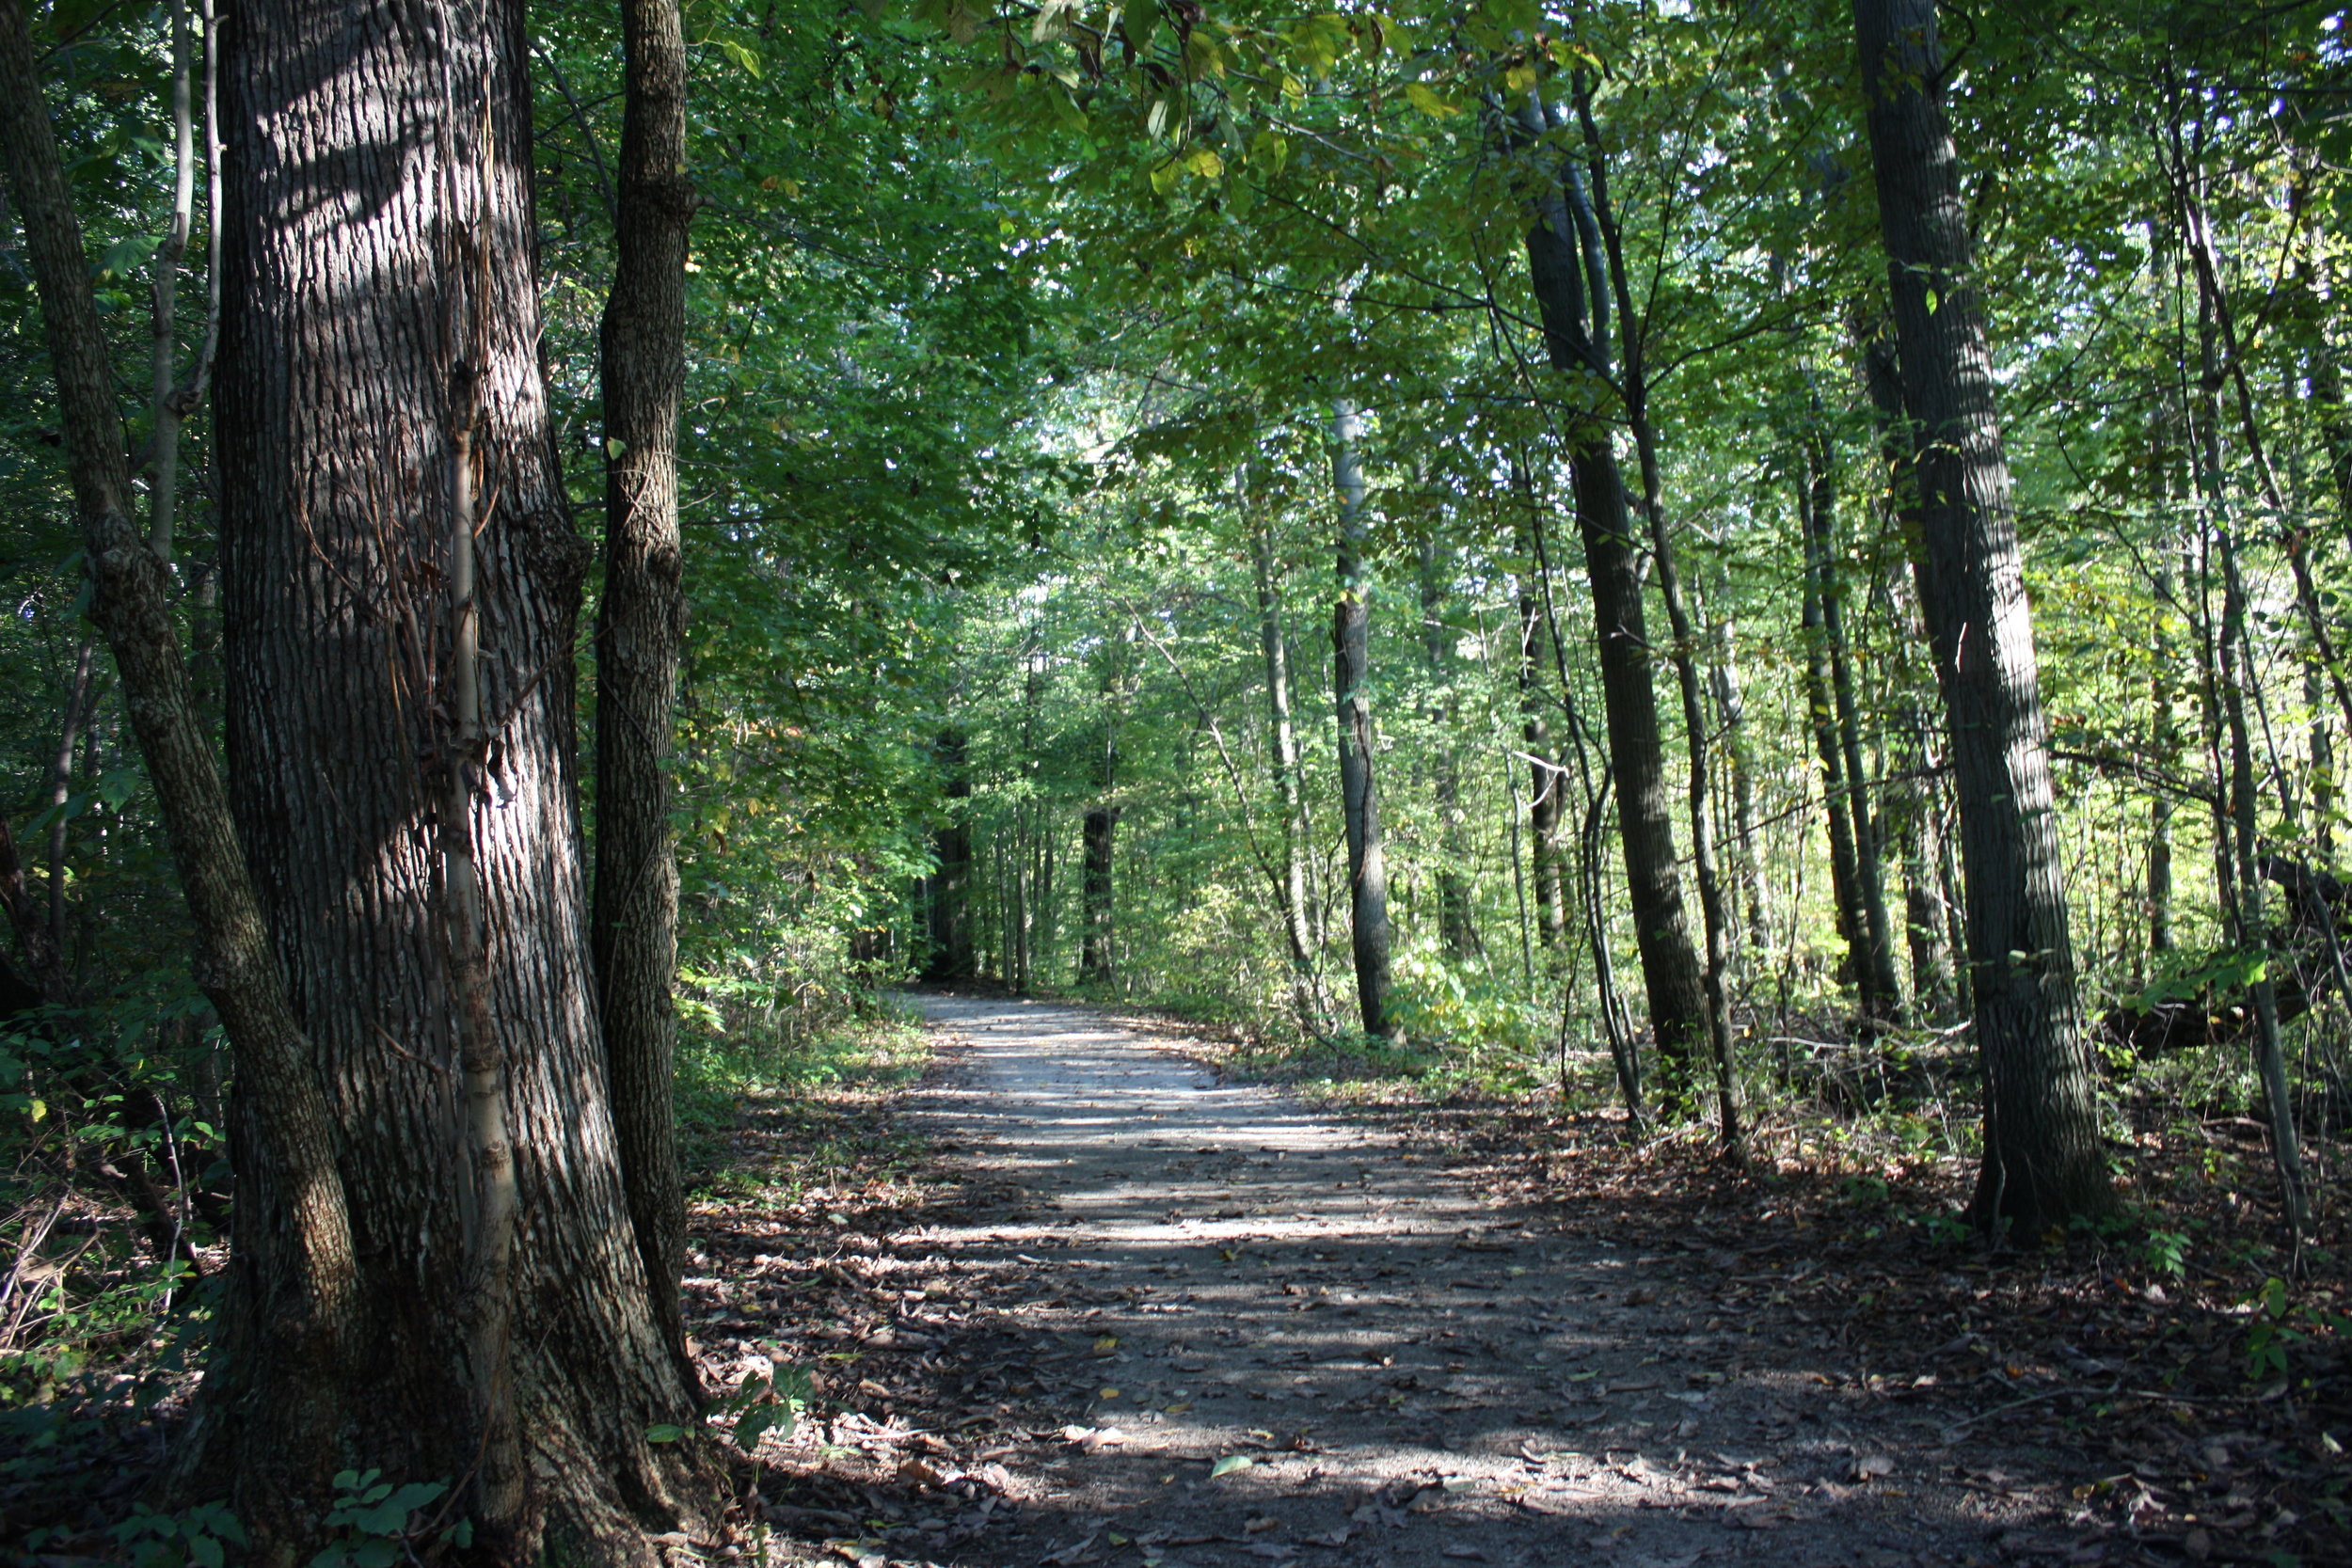 Wooded walking path along the Wayne Shipman Memorial Trail at Sheldon Woods